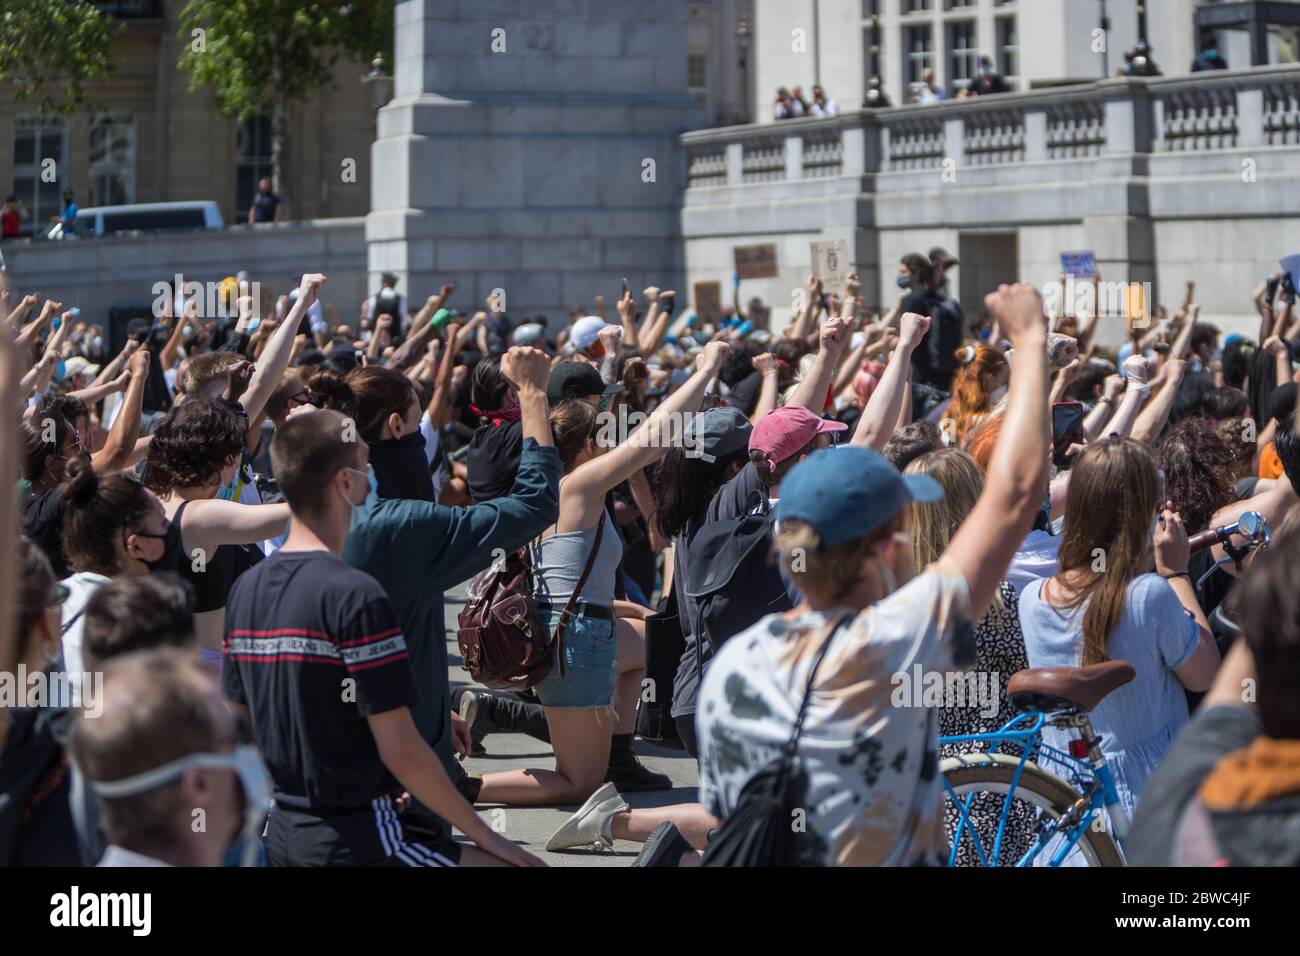 #BlackLivesMatter solidarity protest in London Stock Photo